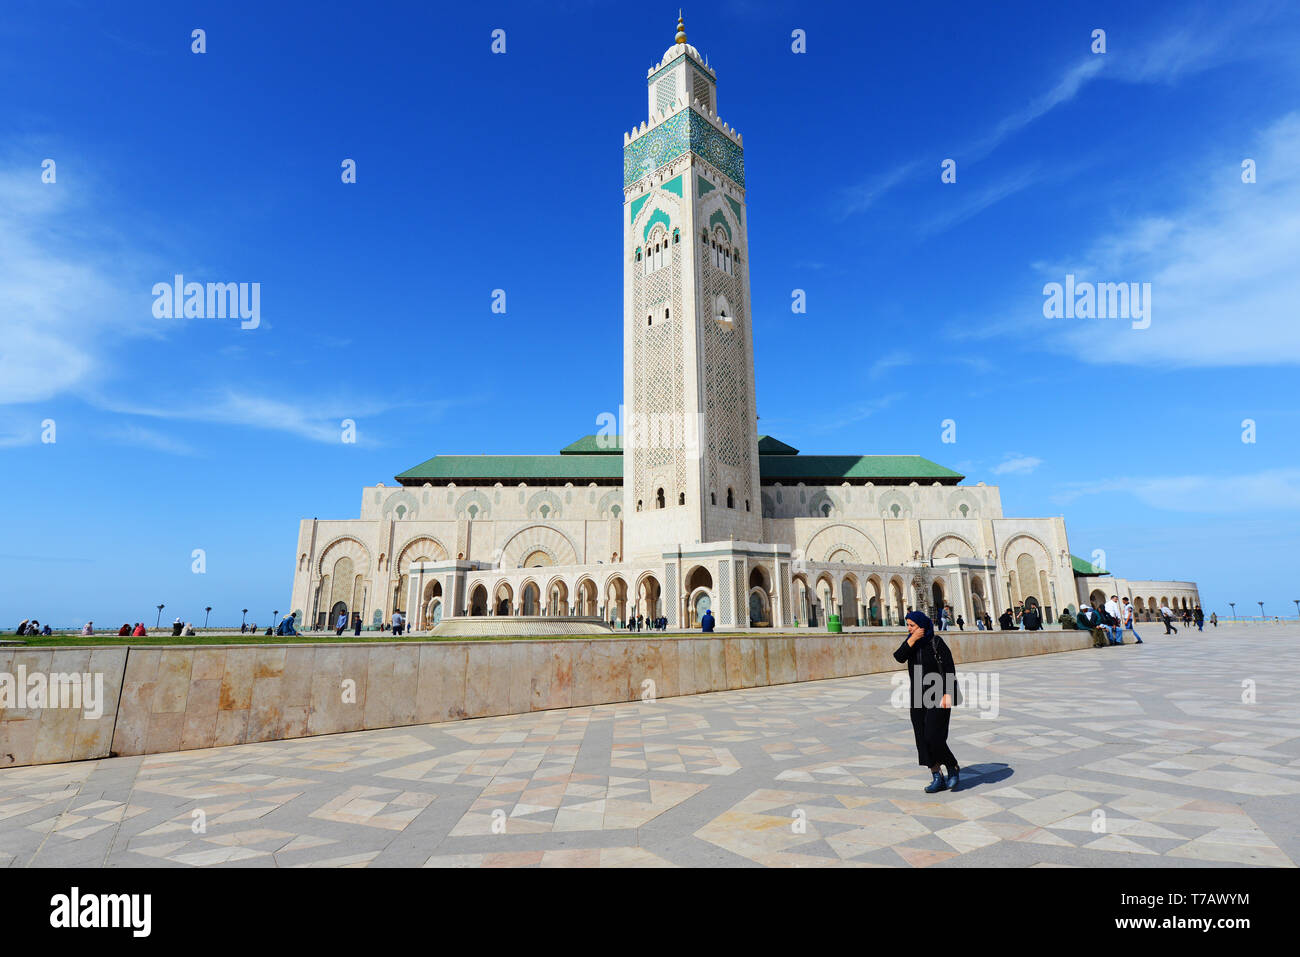 Hassan II mosque in Casablanca, Morocco. Stock Photo